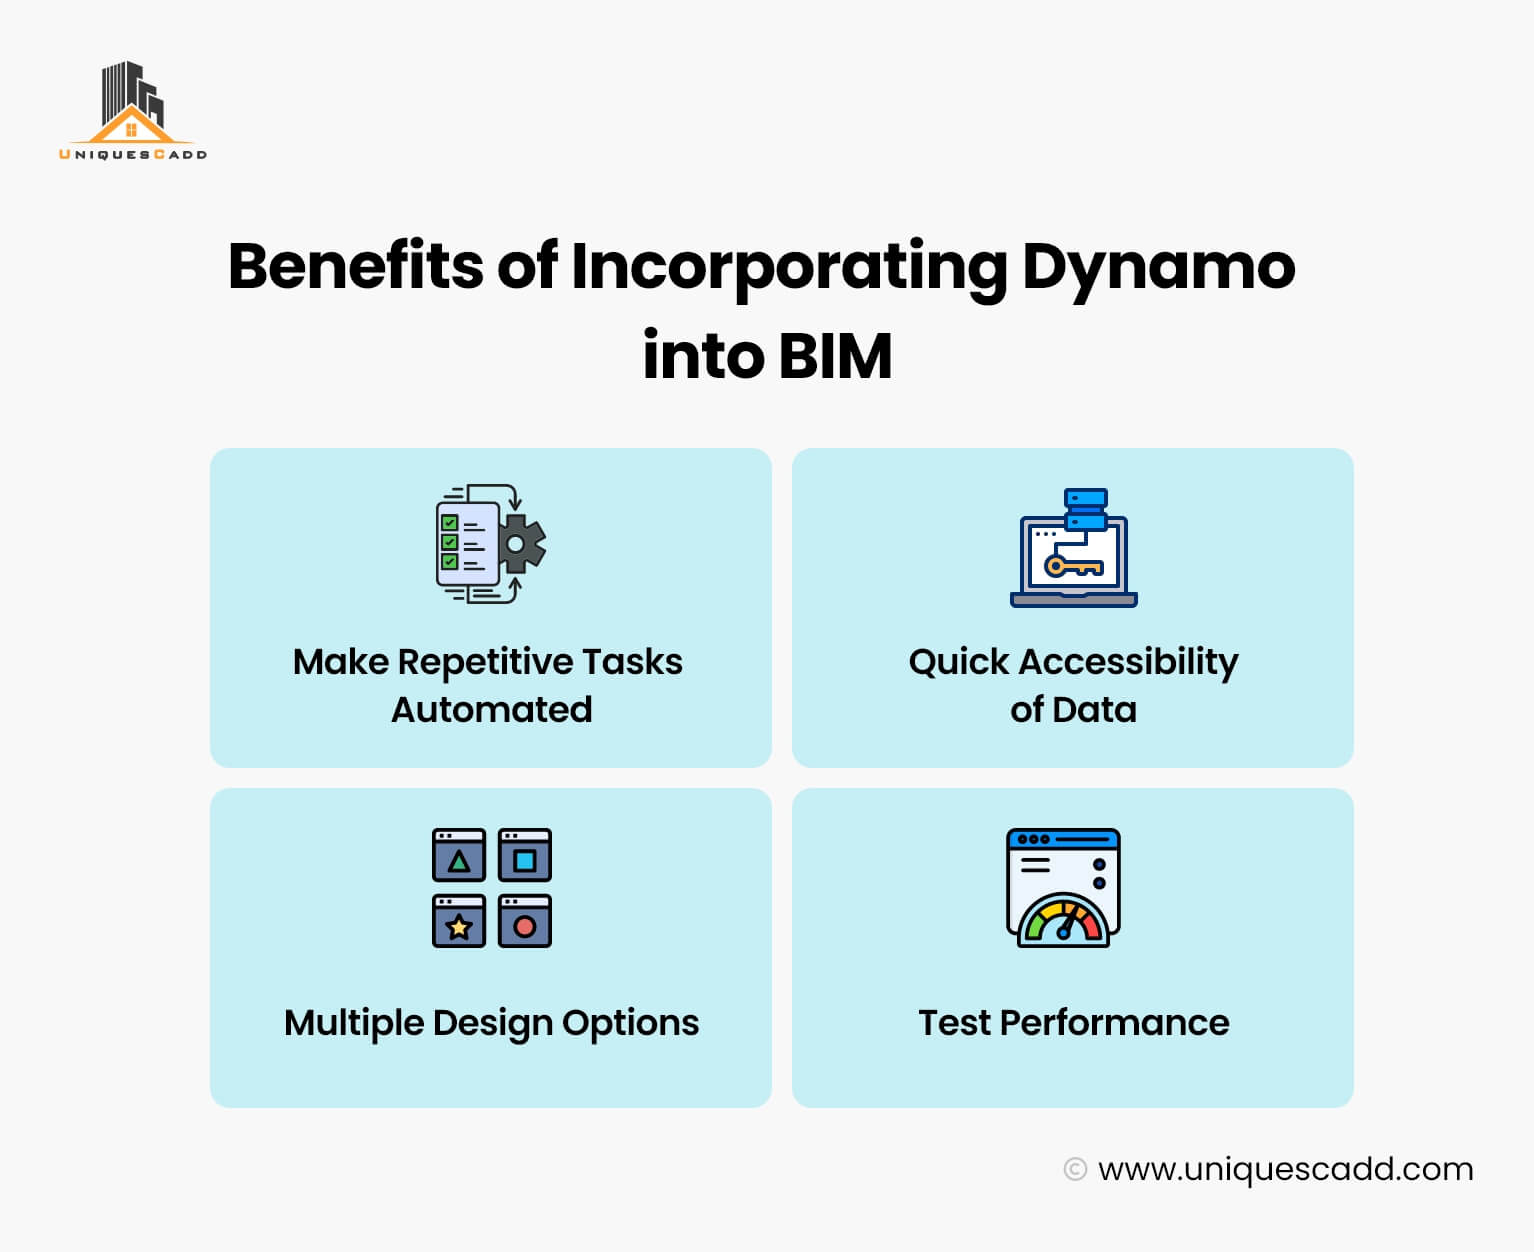 Benefits of Incorporating Dynamo into BIM